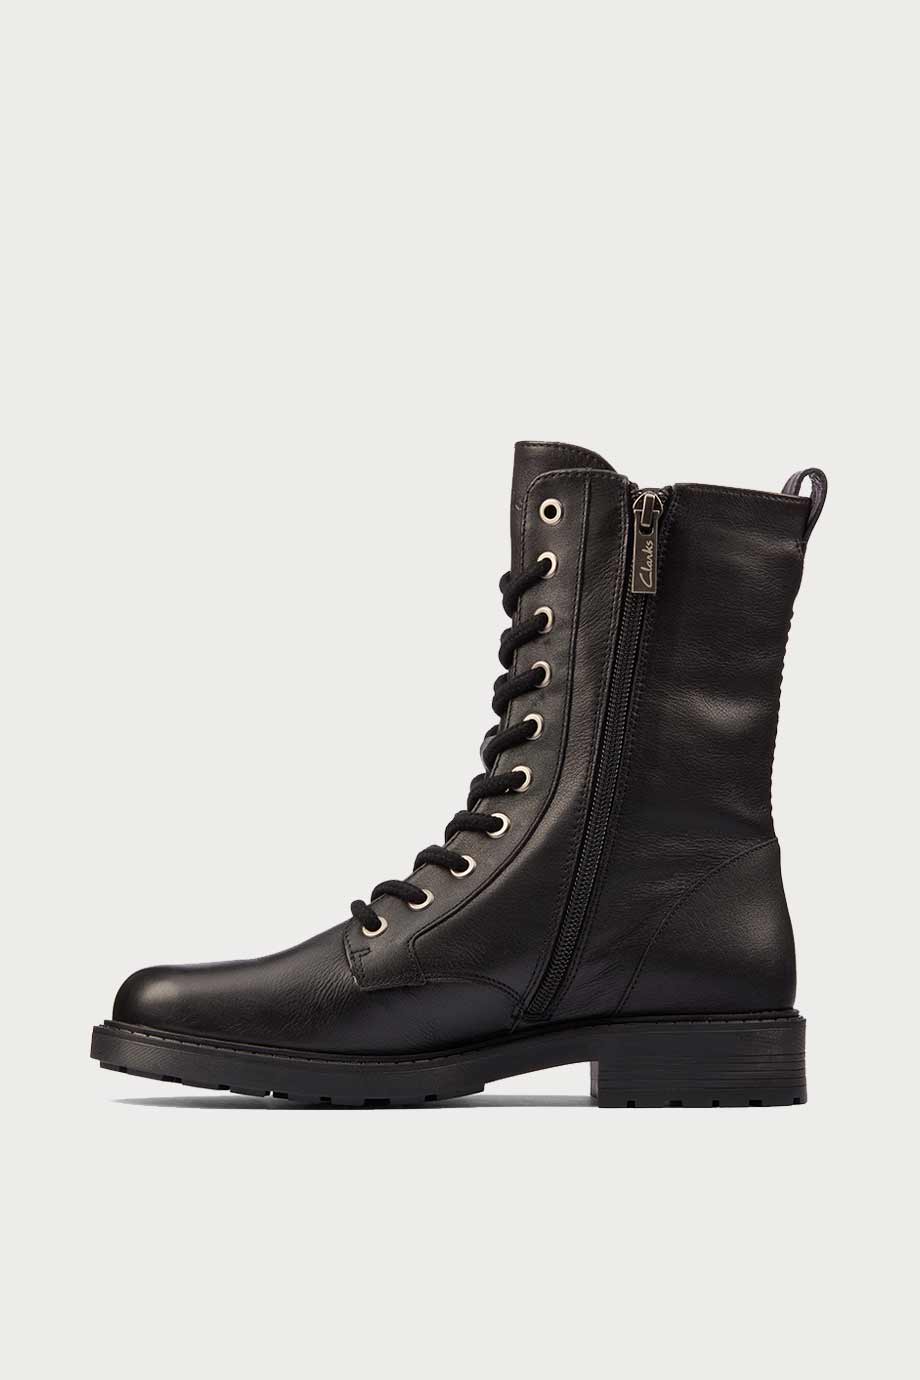 spiridoula metheniti shoes xalkida p orinoco 2 style black leather clarks 5 1